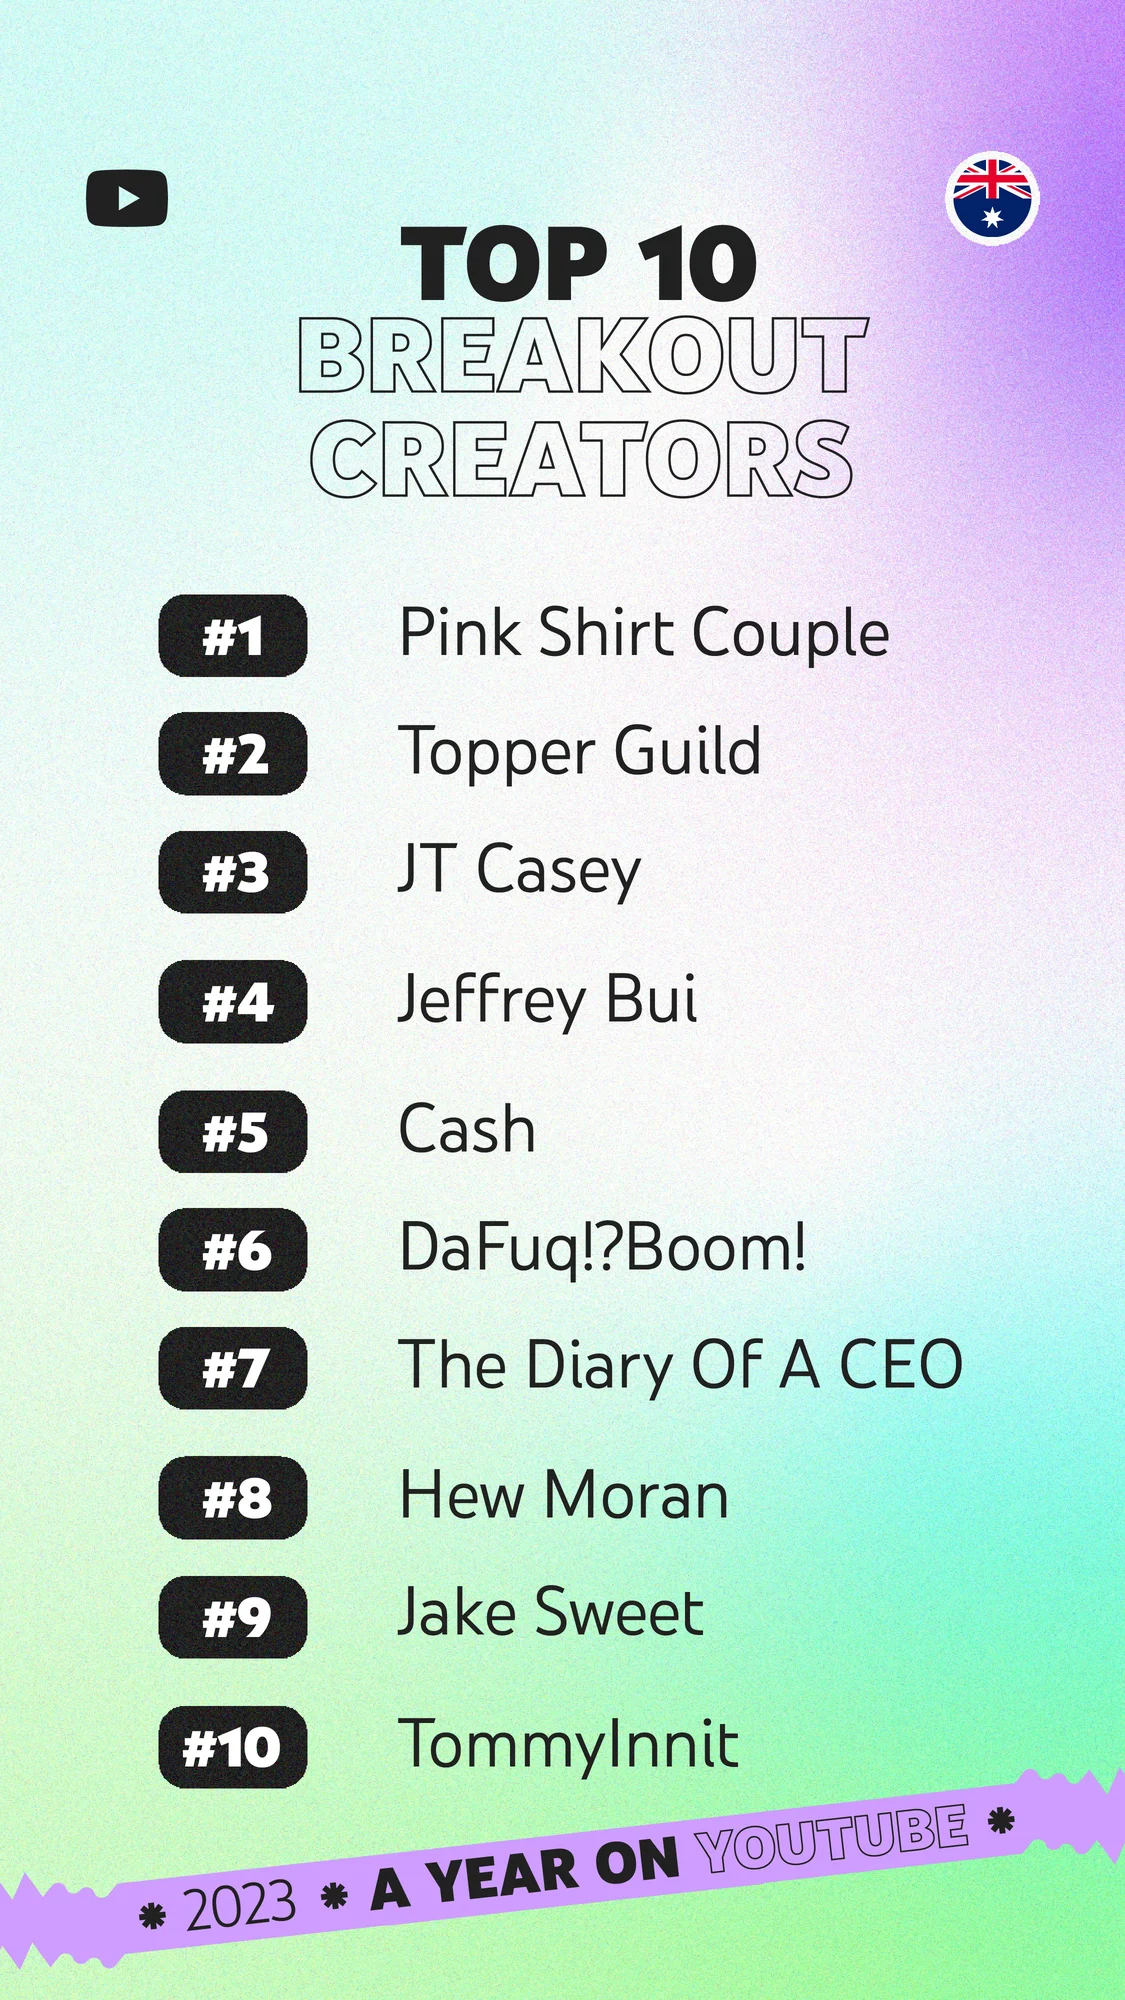 Top 10 Breakout Creators in Australia in 2023